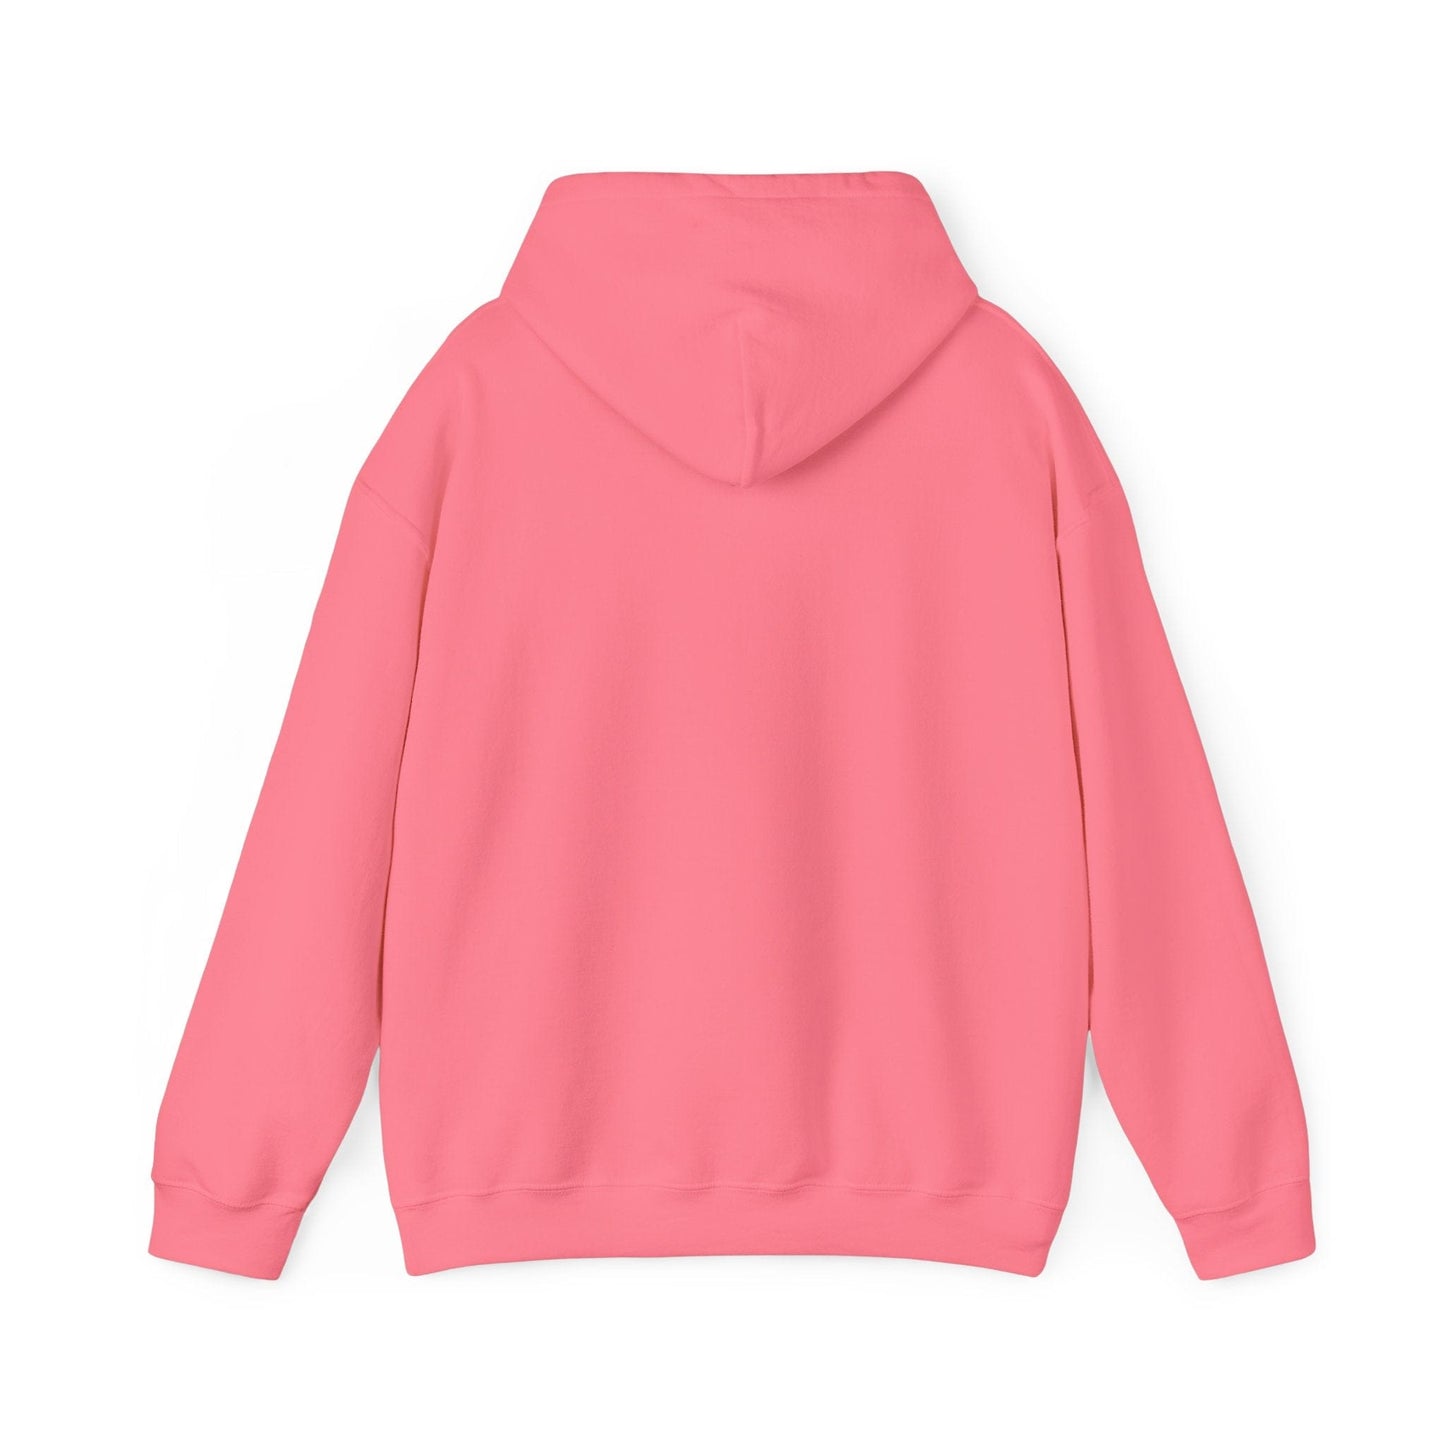 Nana Is My Name Spoiling Is My Game Unisex Heavy Blend™ Hooded Sweatshirt